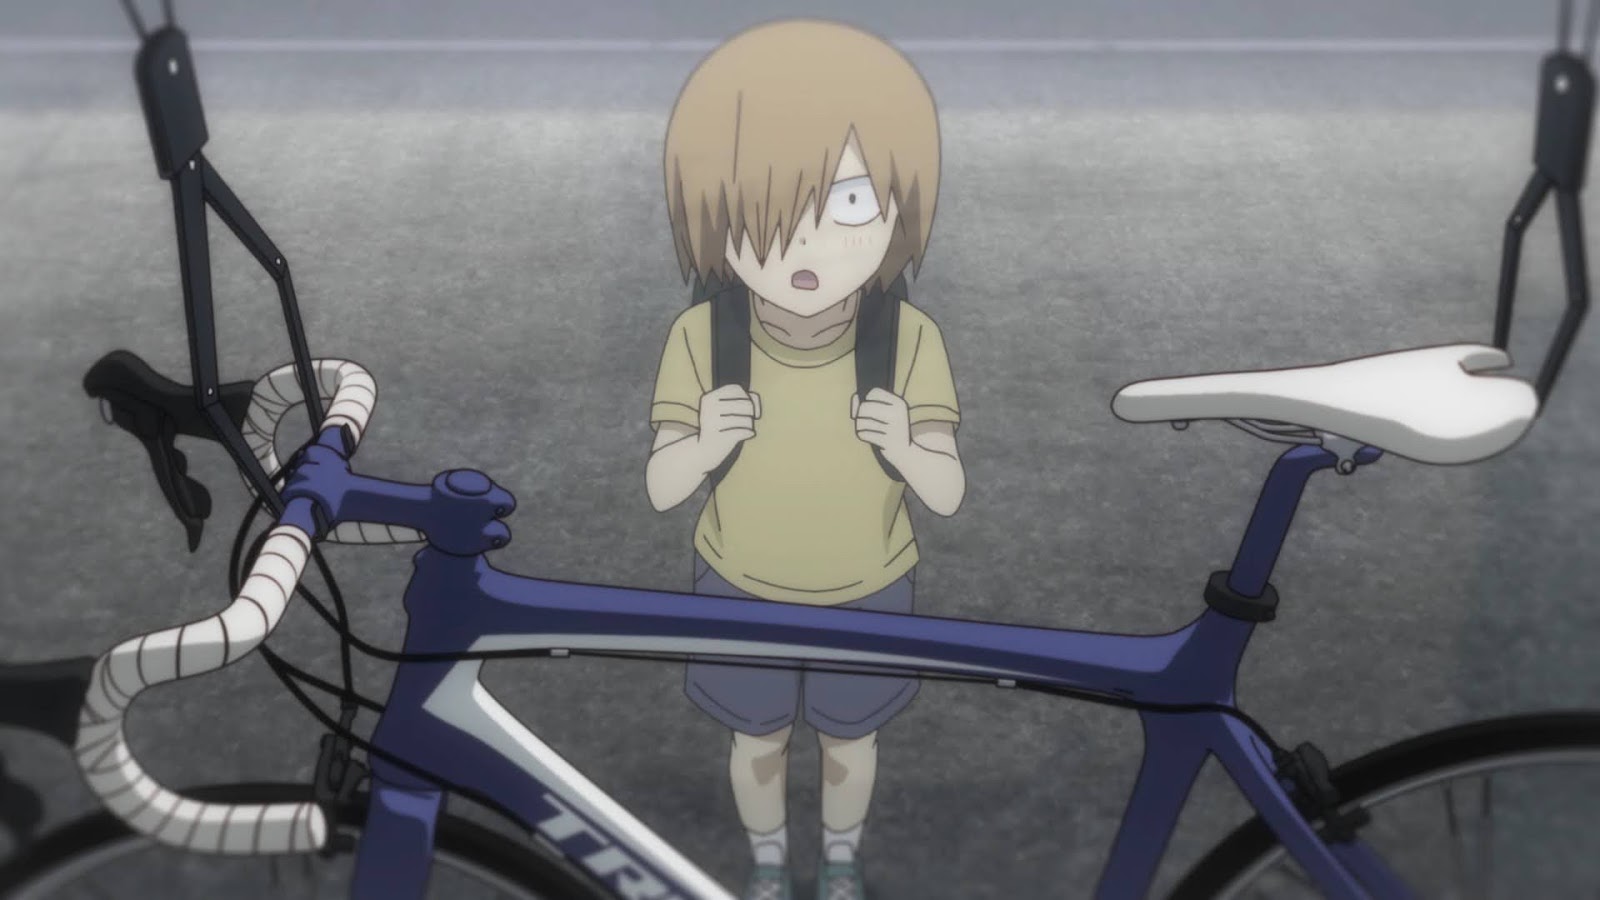 Joeschmo's Gears and Grounds: Yowamushi Pedal - Limit Break - Episode 15 -  10 Second Anime